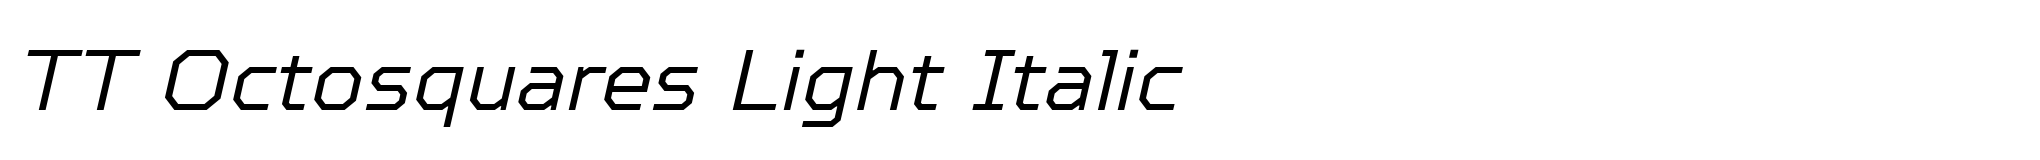 TT Octosquares Light Italic image